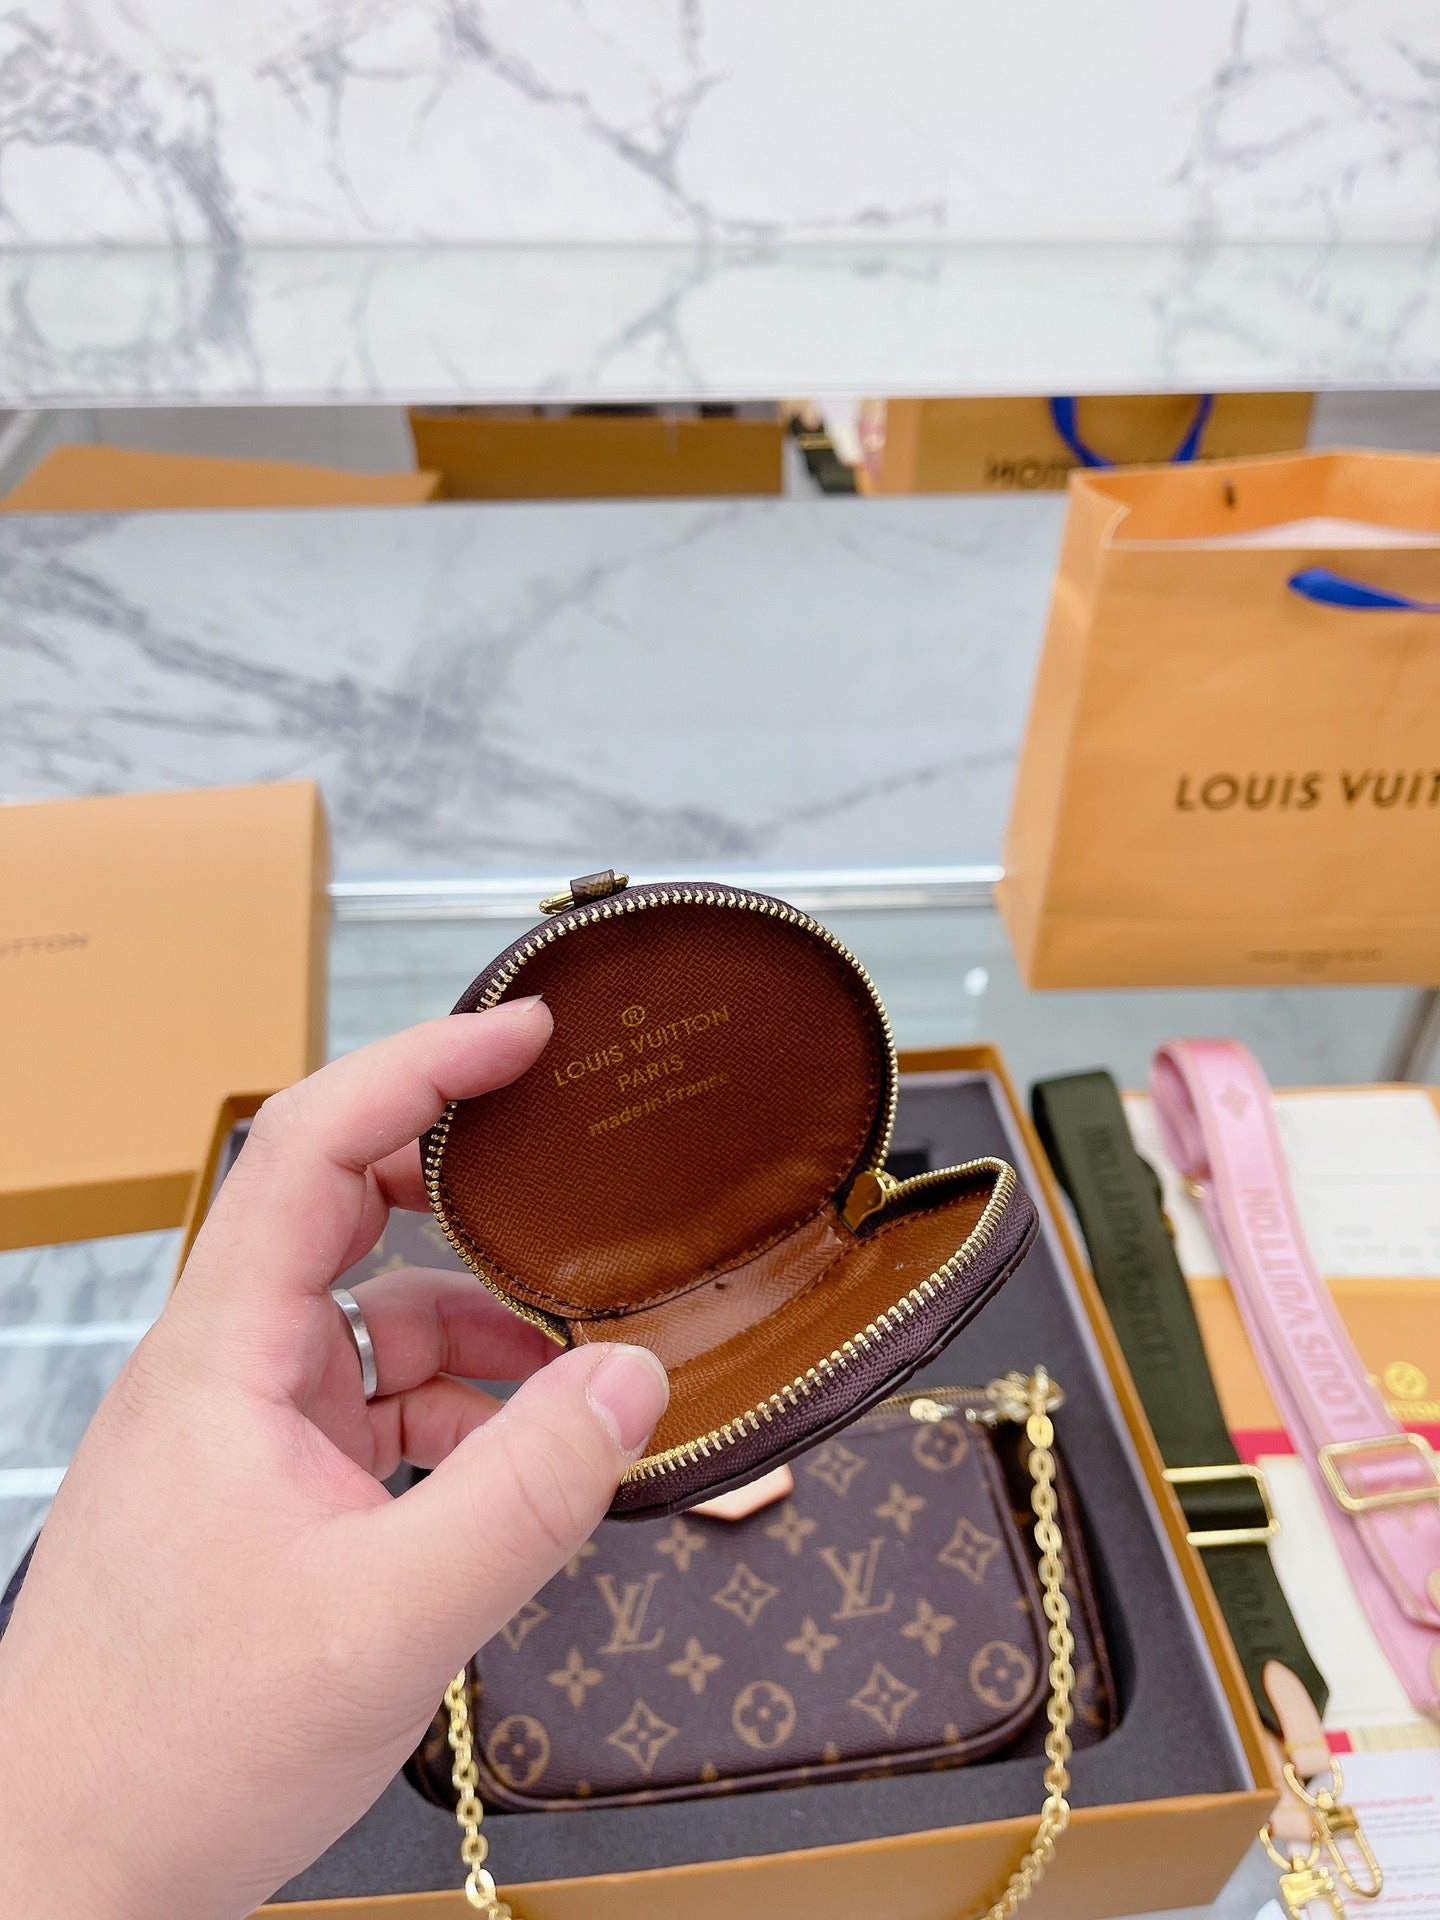 LV Box - Louis Vuitton Replica Store